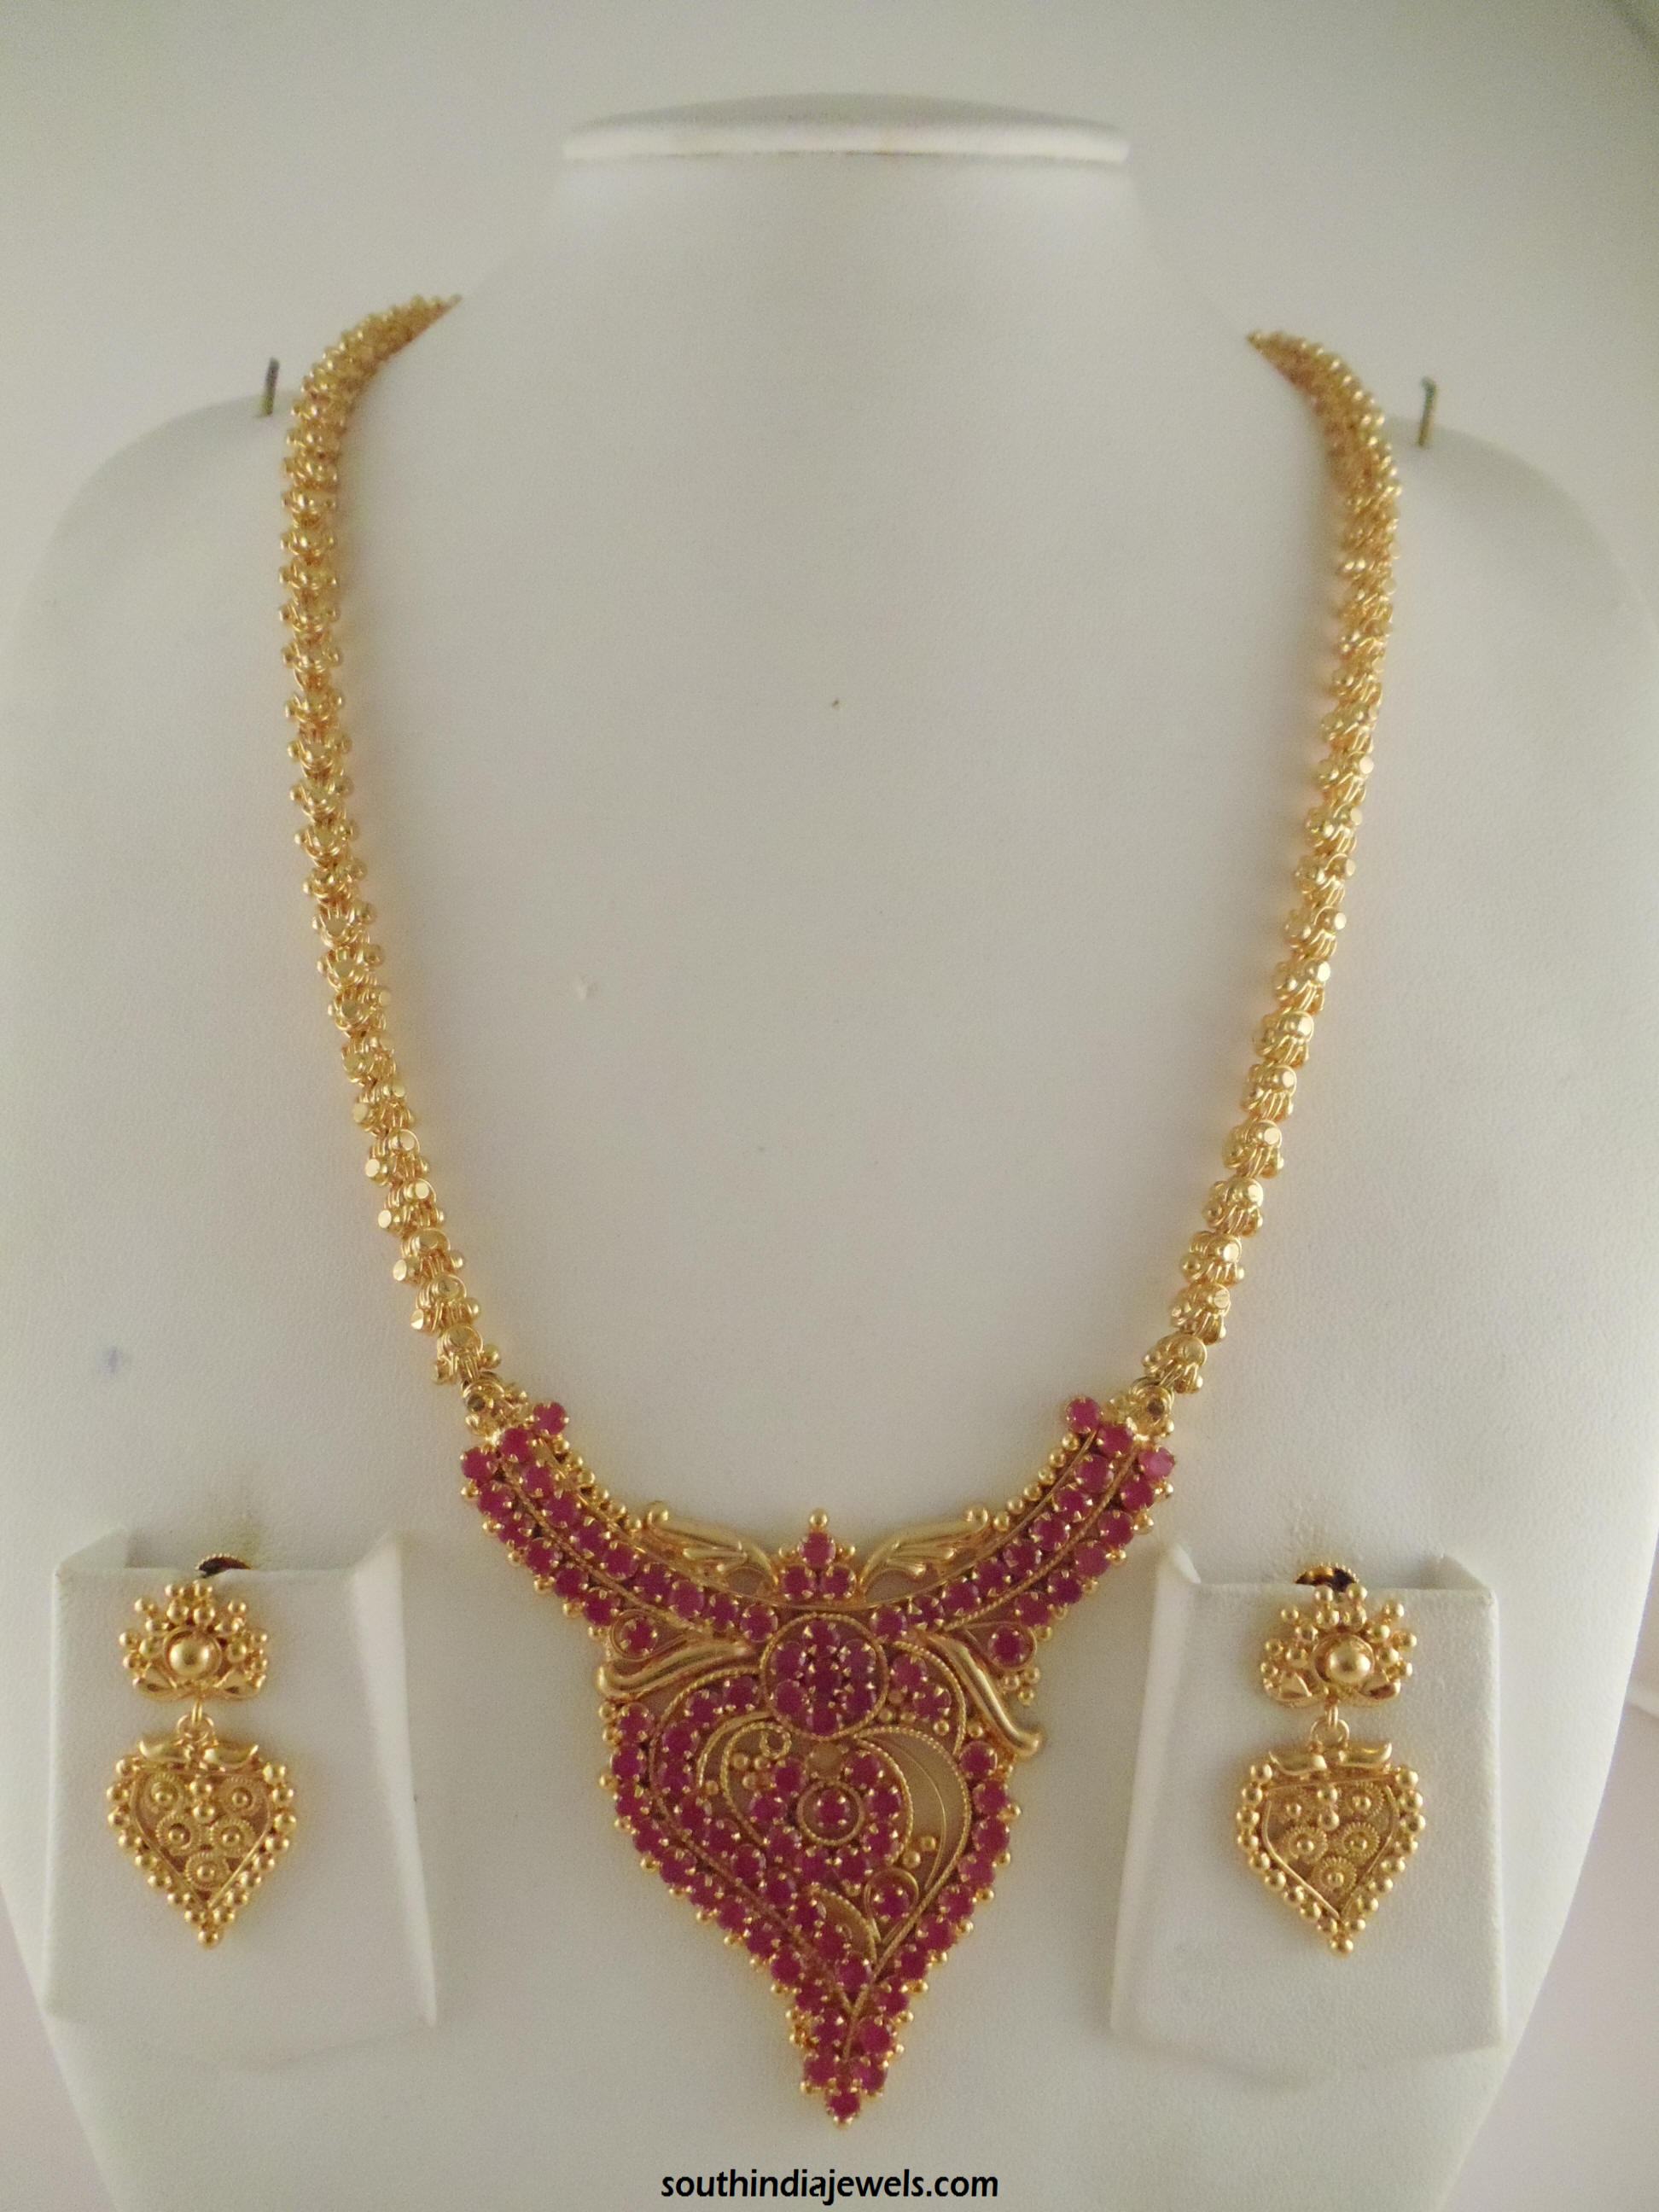 One Gram Gold Ruby Long Necklace Design South India Jewels,Kitchenaid Artisan Design Ksm155gb